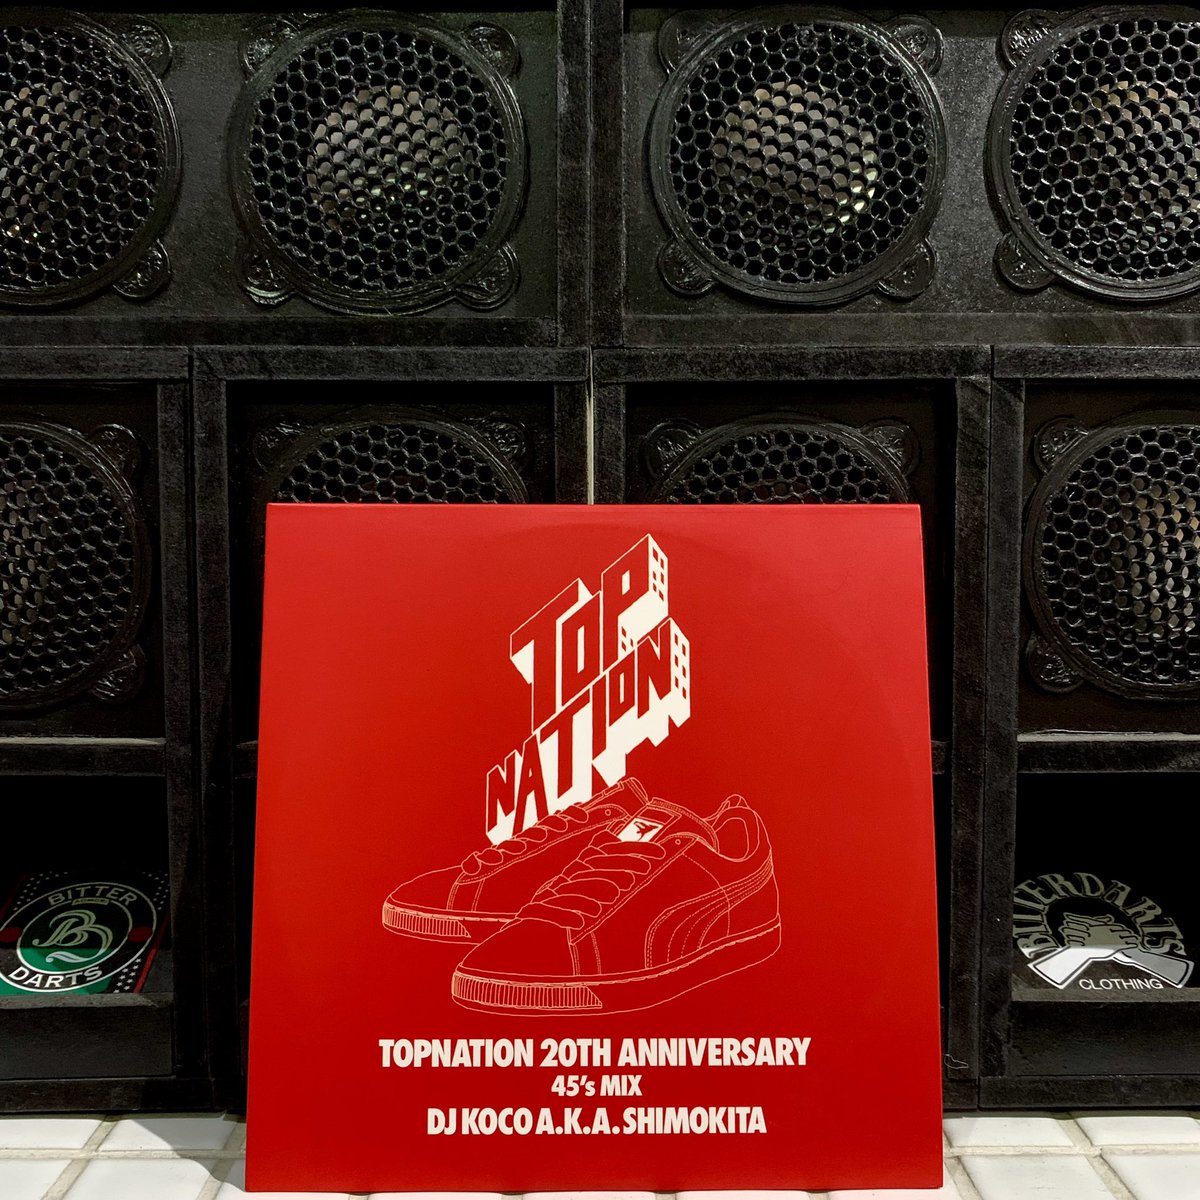 Now playing💿🎶
『TOPNATION 20TH ANNIVERSARY 45's MIX』
MIXED by DJ KOCO A.K.A. SHIMOKITA

BITTER DARTS MIX CD PAGE
bitterdarts.com/shouhin/MixCD-…

#mixcd #djkocoakashimokita #topnation20thanniversary45smix #hiphop #funk #raregroove #青森洋服屋 #青森レコード #レコードのある店 #aomori